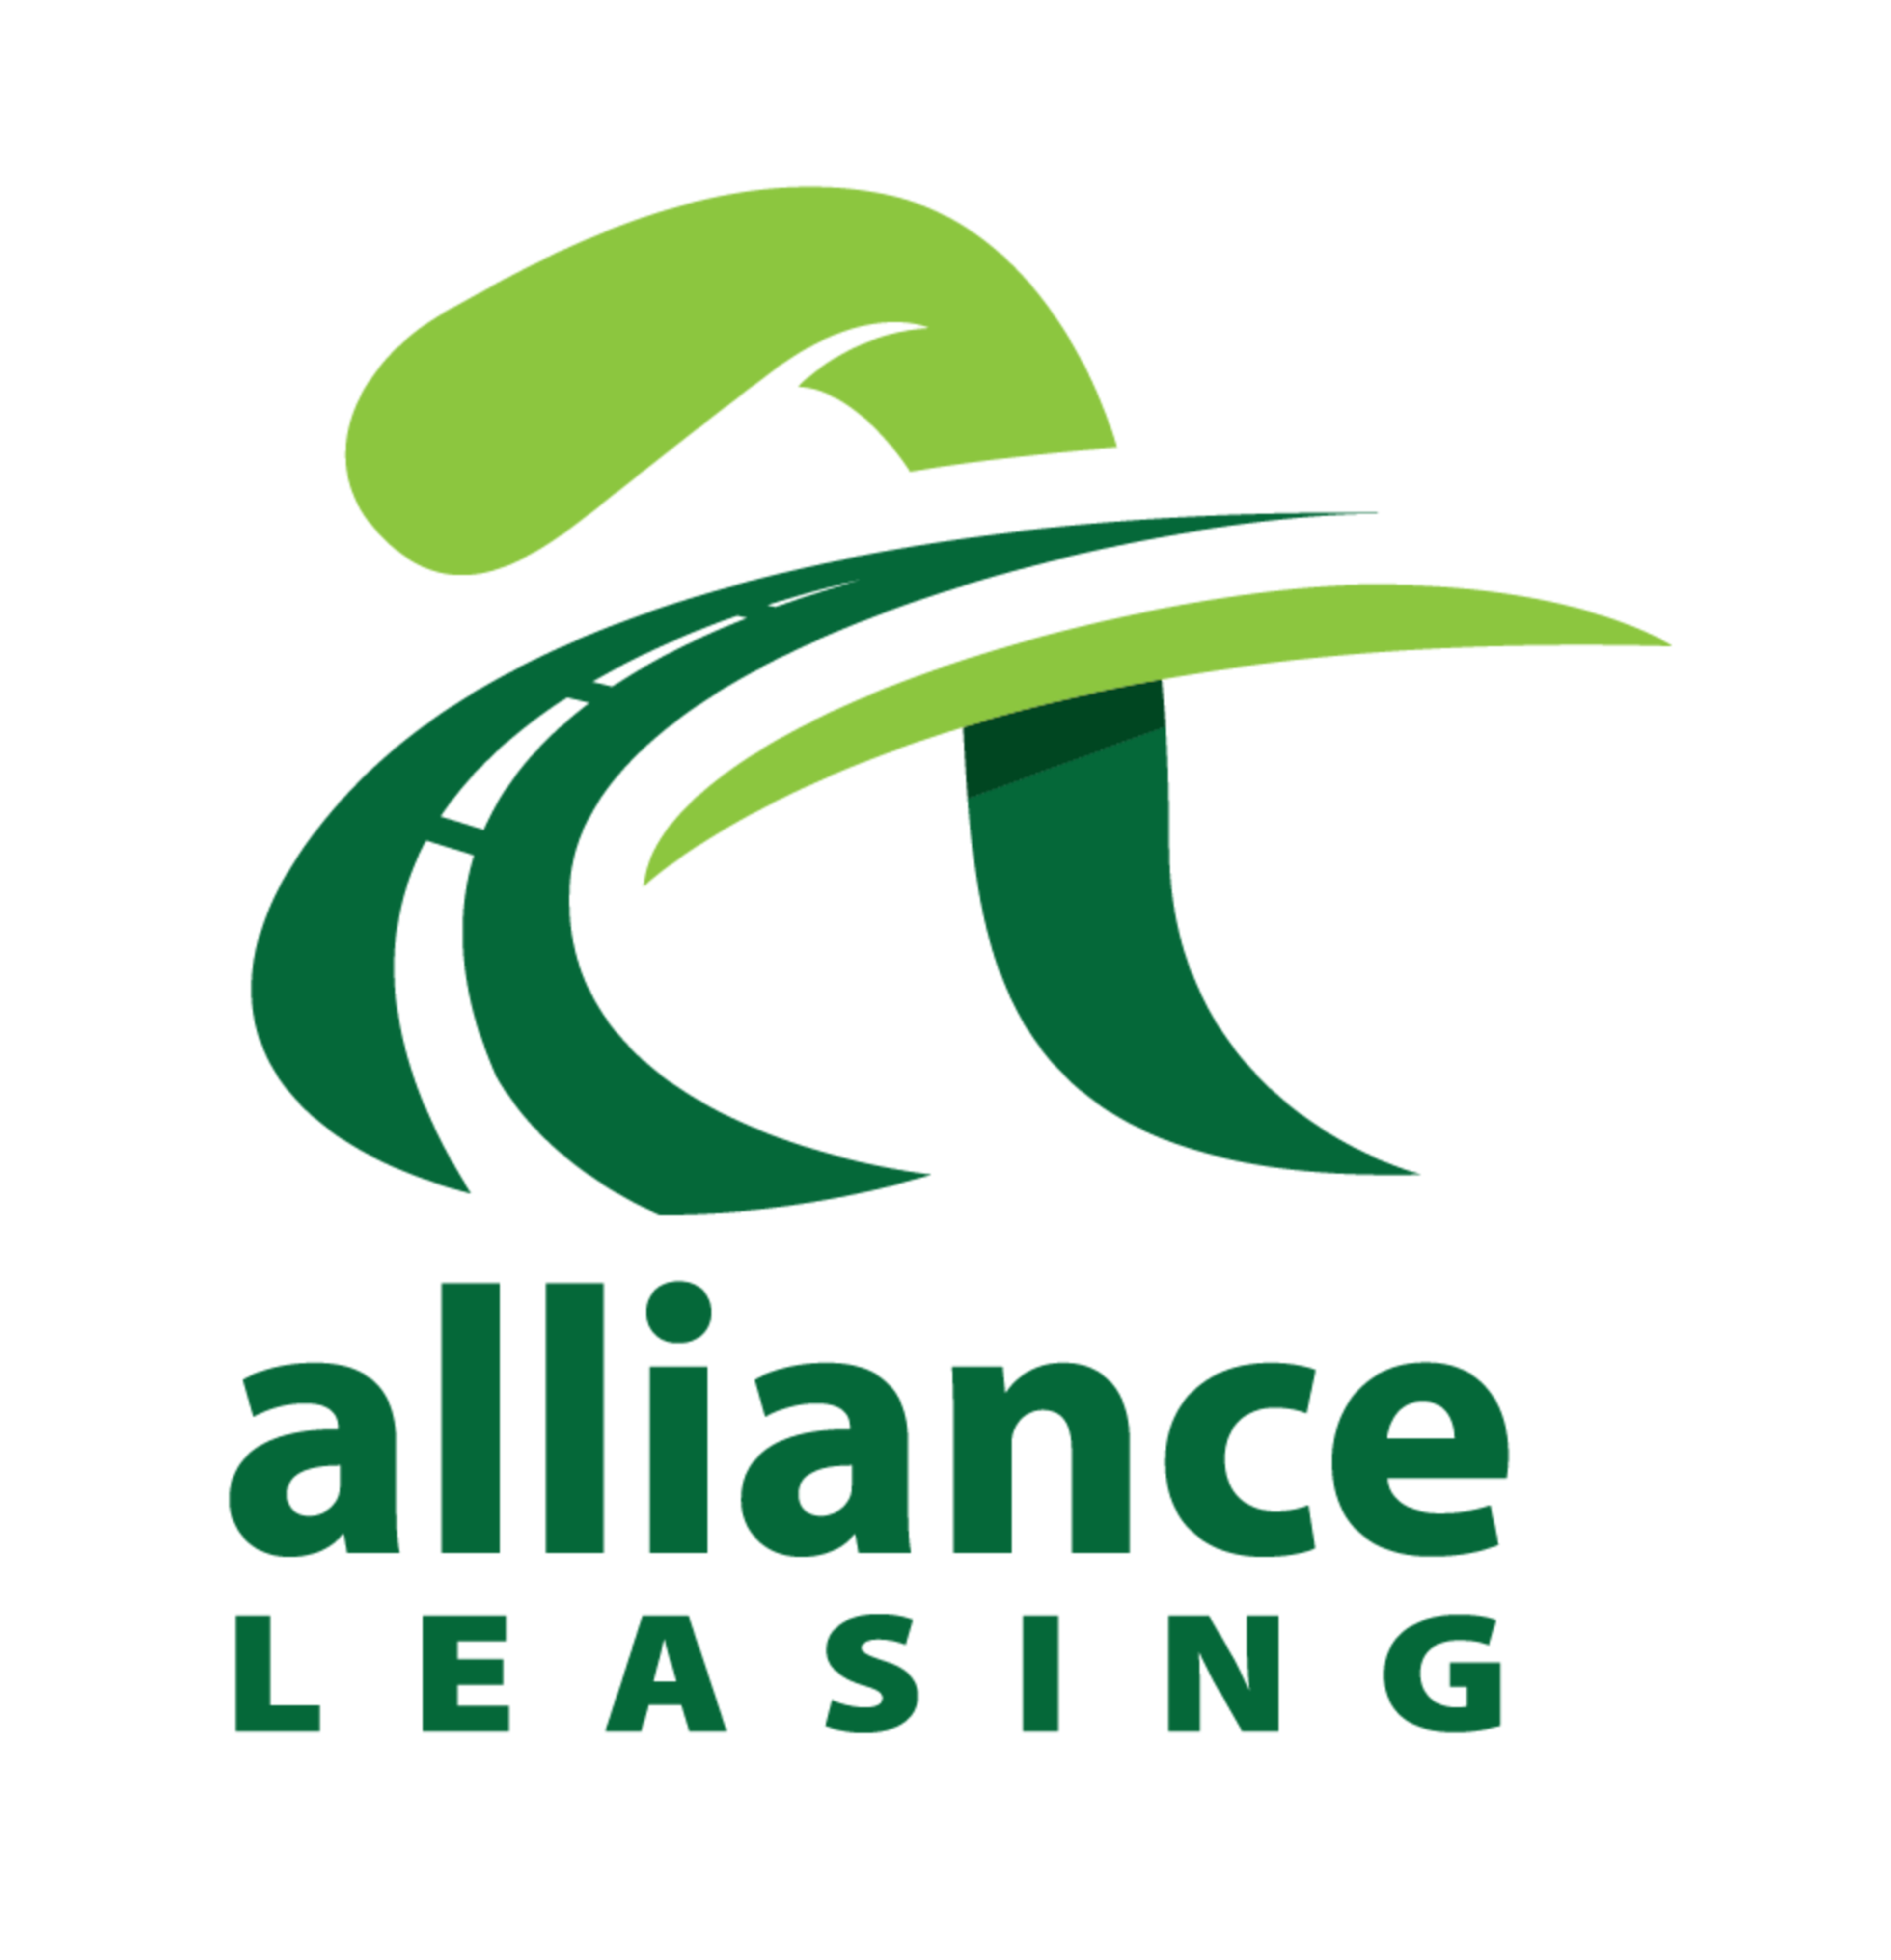 http://www.allianceleasing.com.au